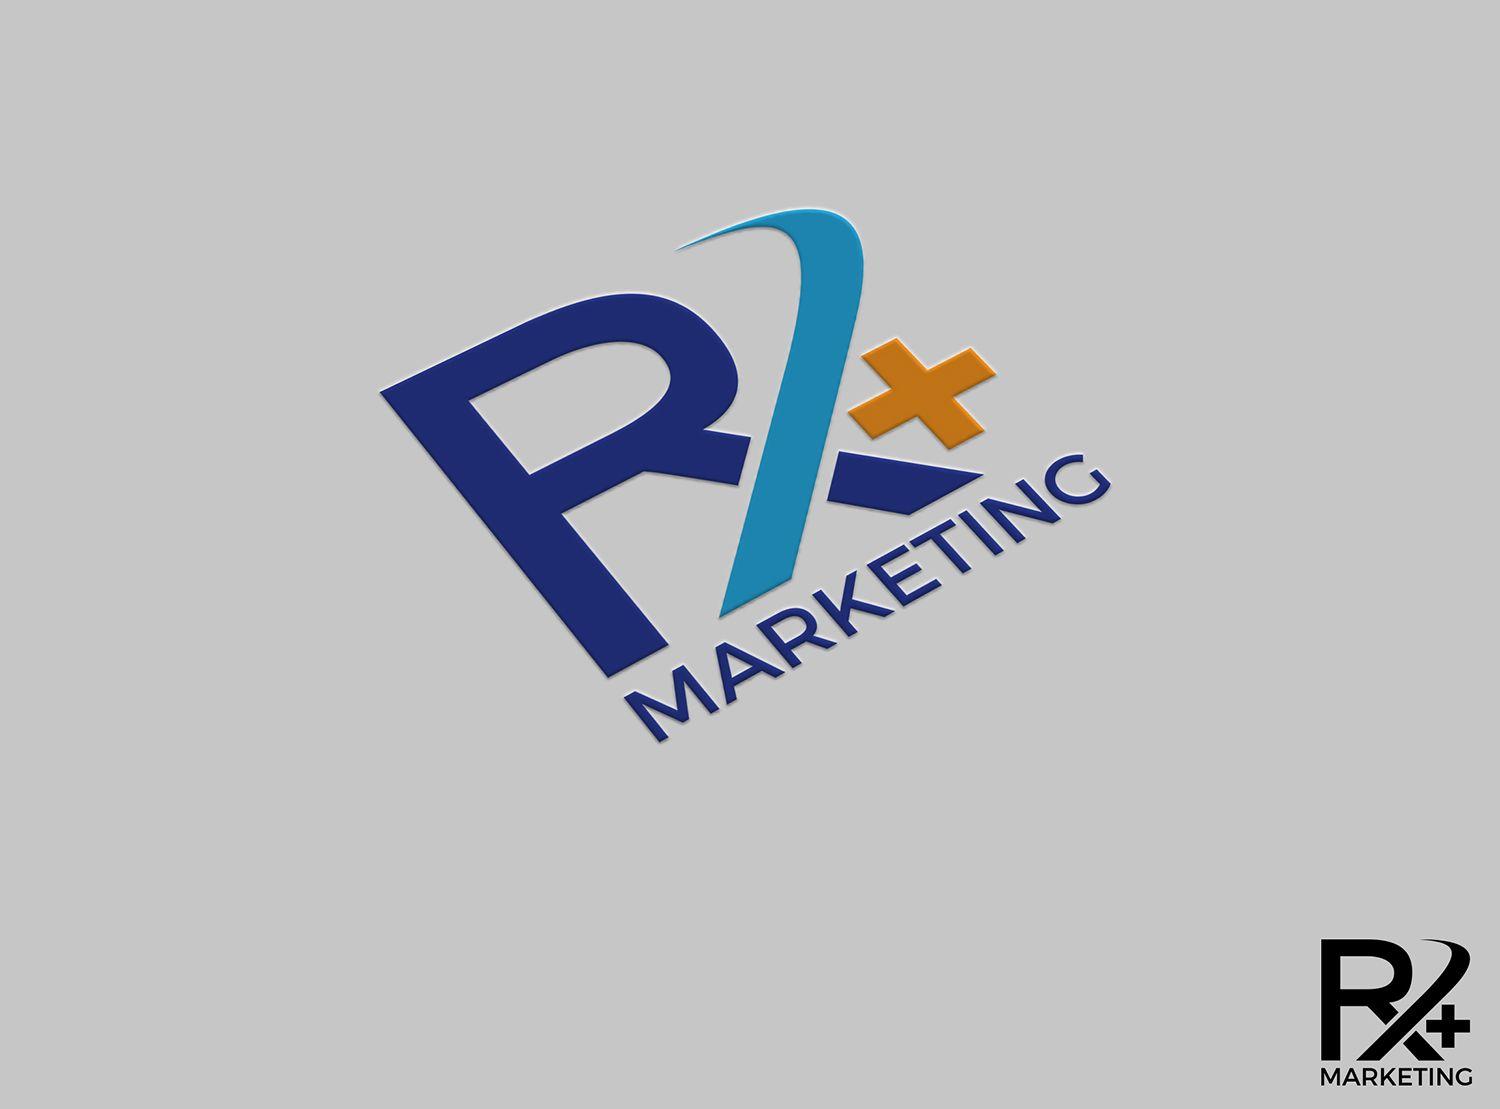 RX Logo - Upmarket, Bold, Marketing Logo Design for Rx Plus Marketing